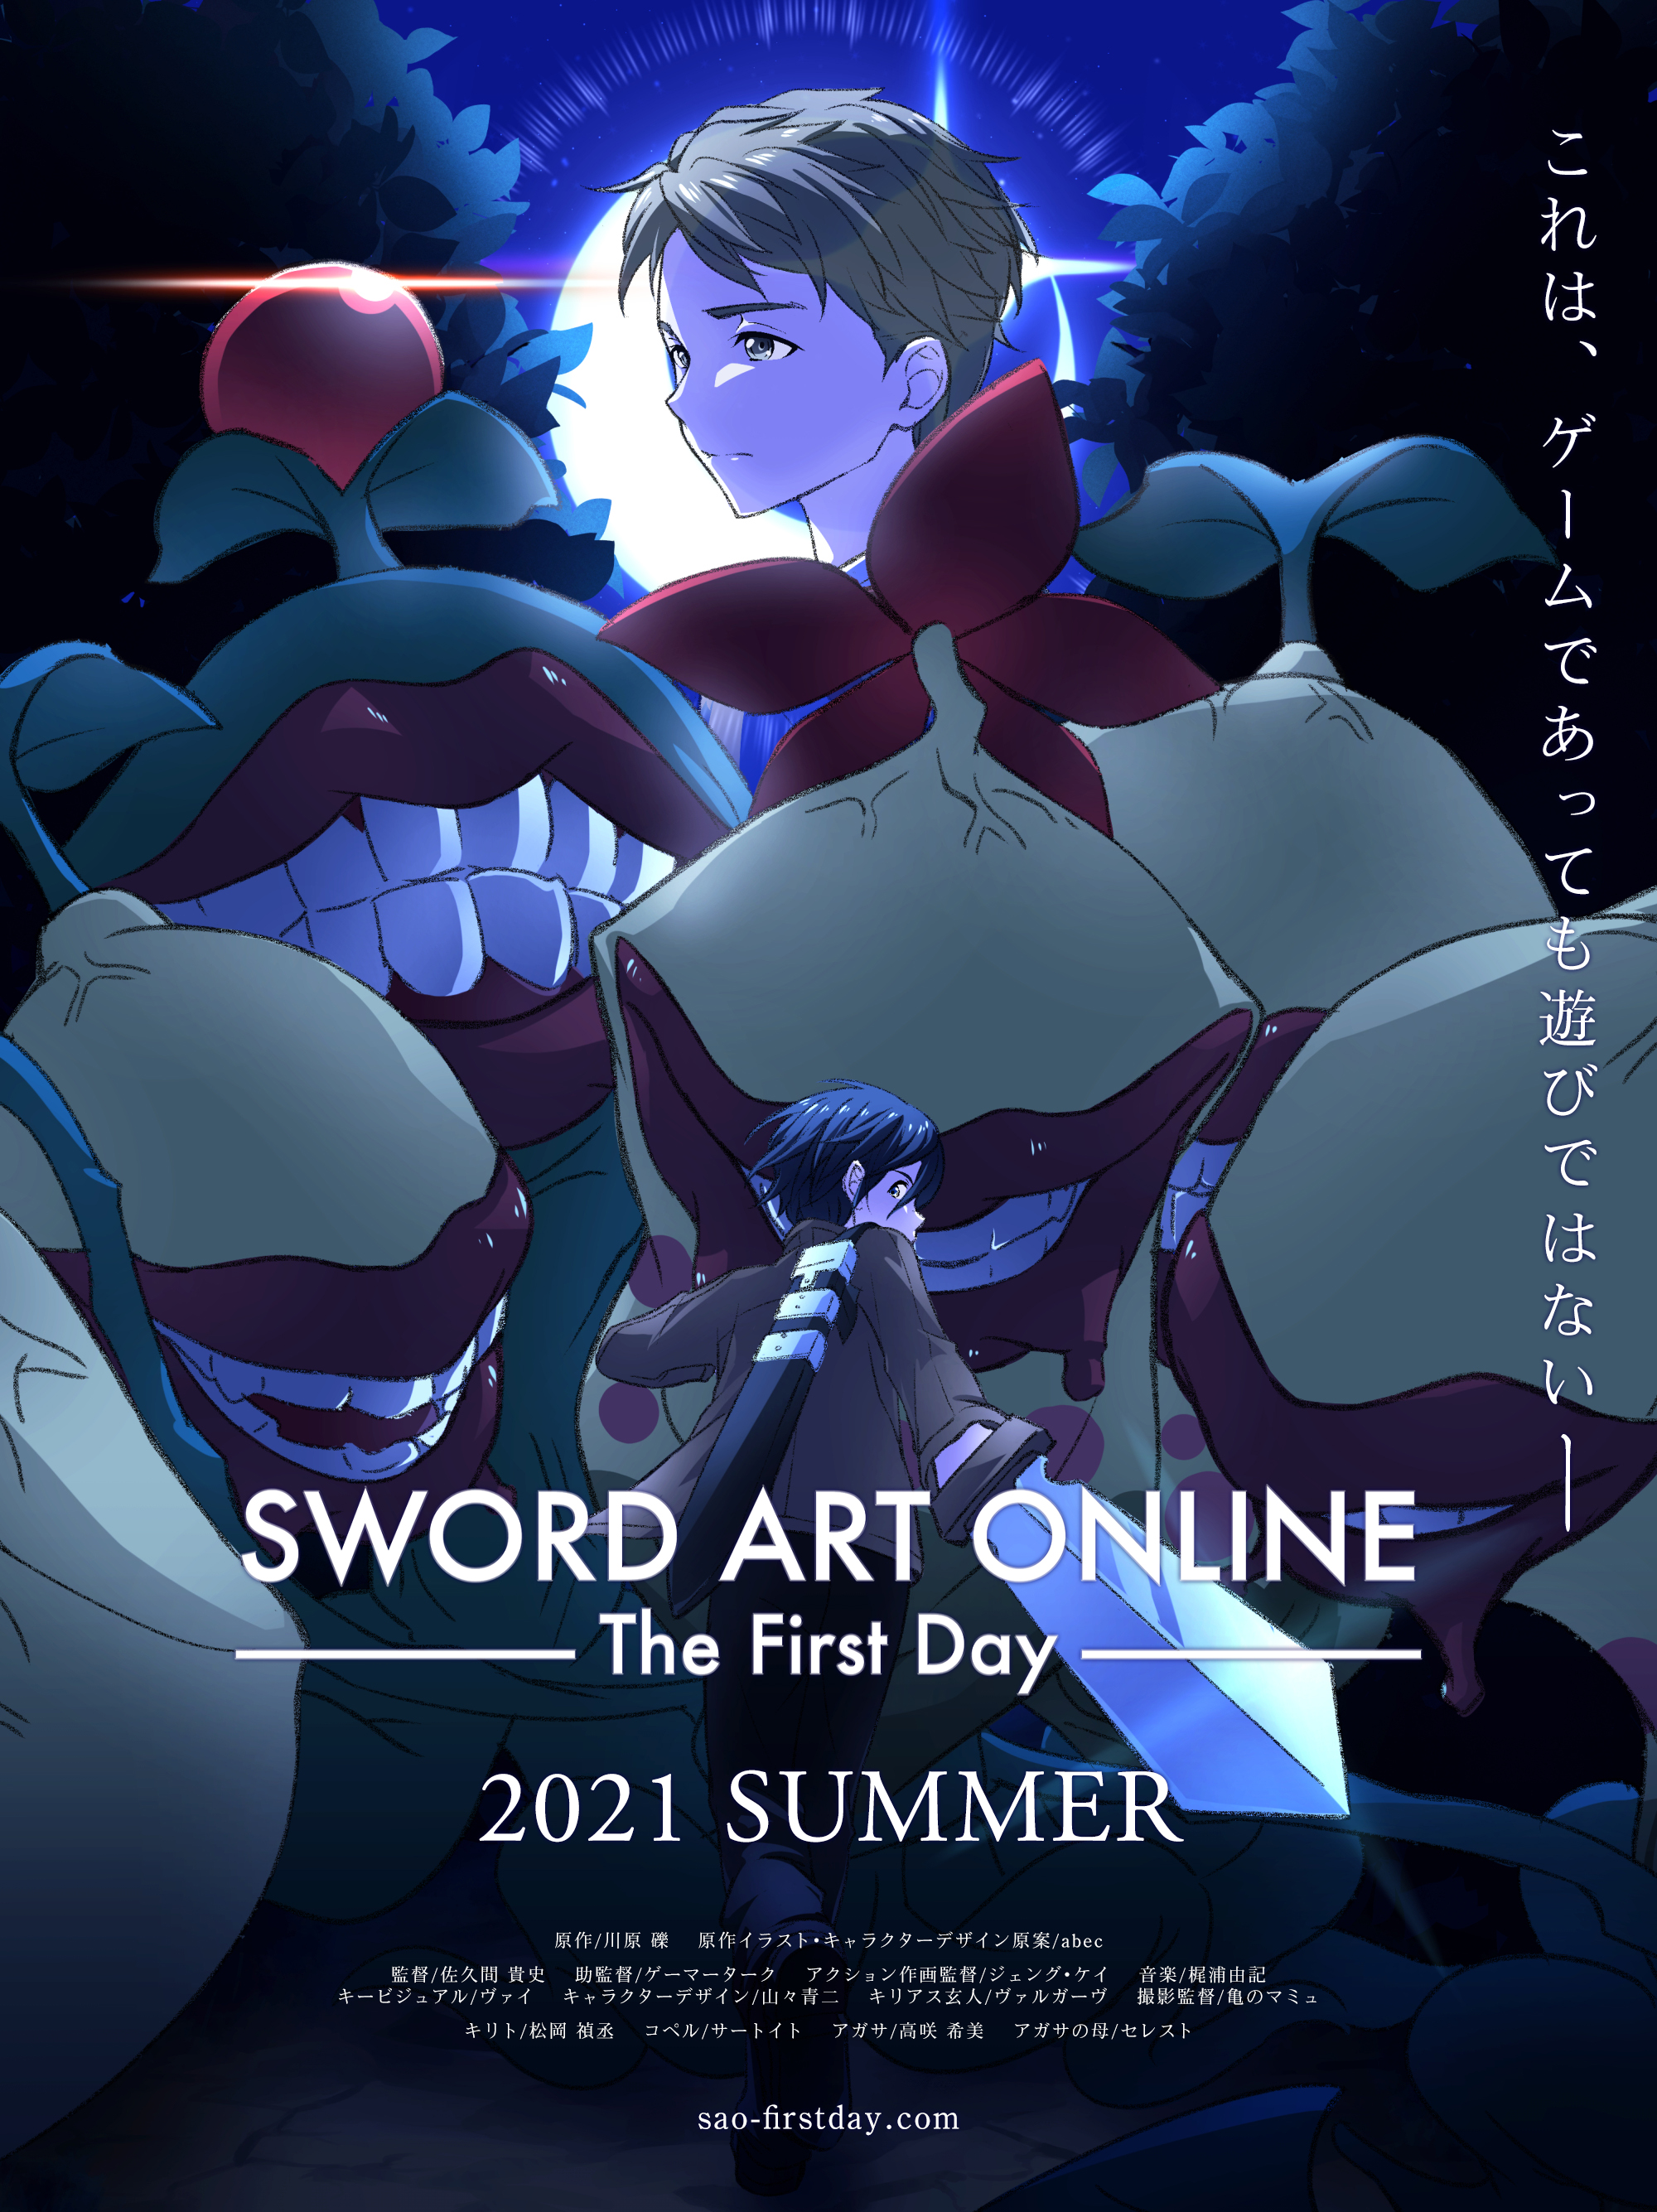 Sword Art Online: Progressive To Receive Anime Adaptation